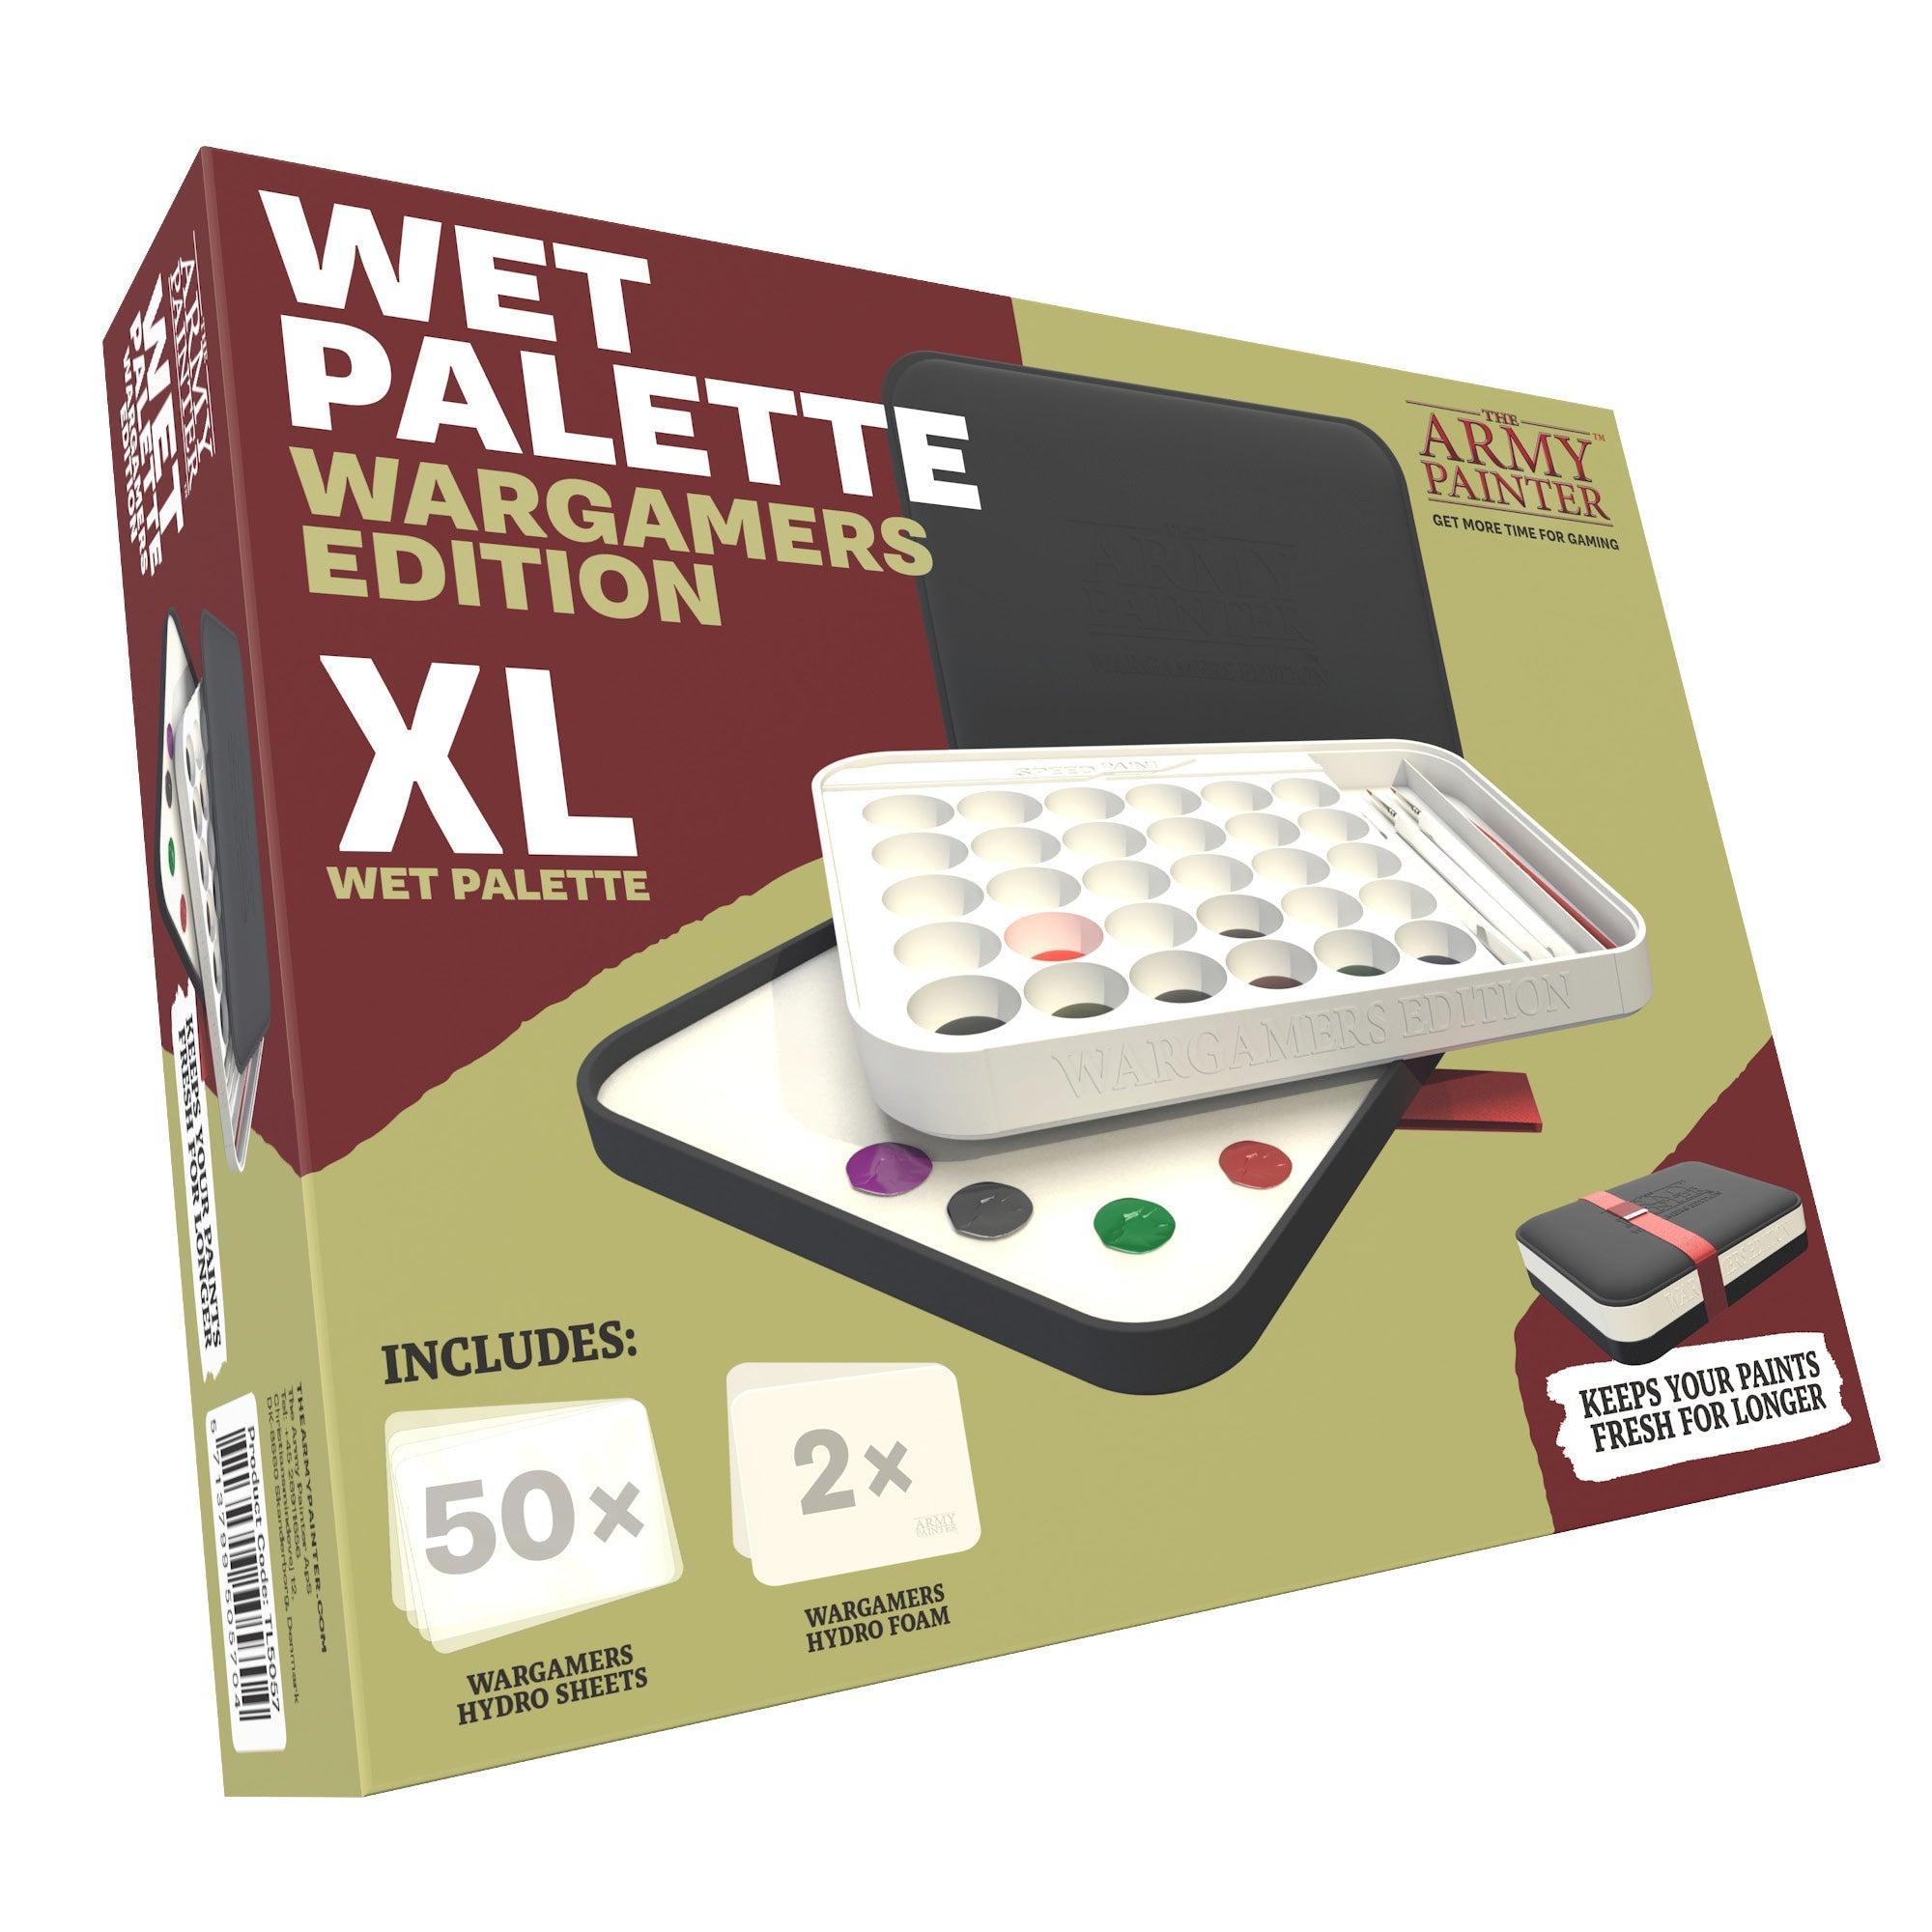 Army Painter Wet Palette XL  Wargamer's Edition